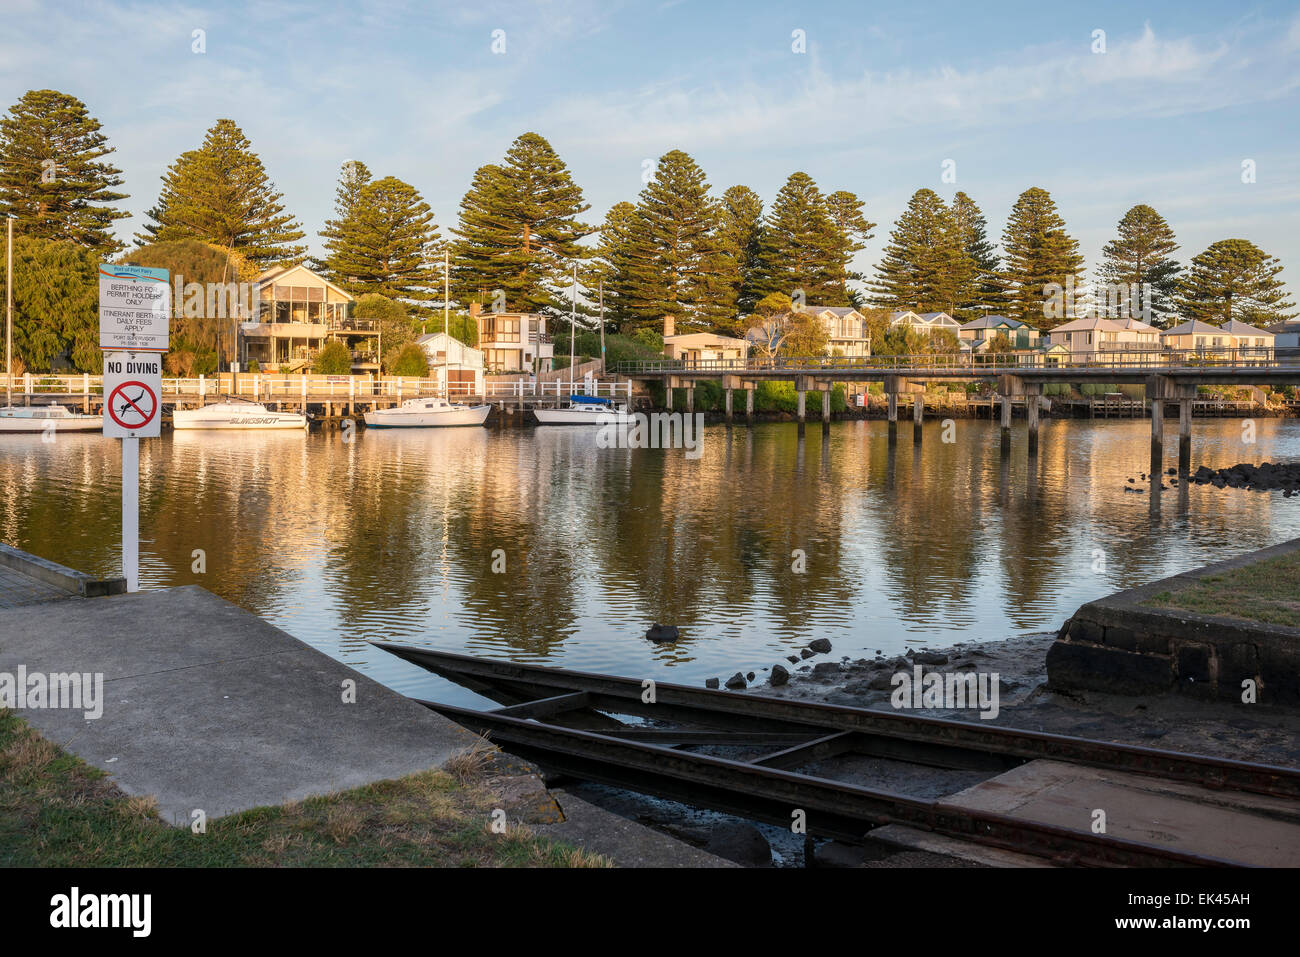 Das Dorf Port Fairy am Fluss Moyne, Victoria Australien Stockfoto